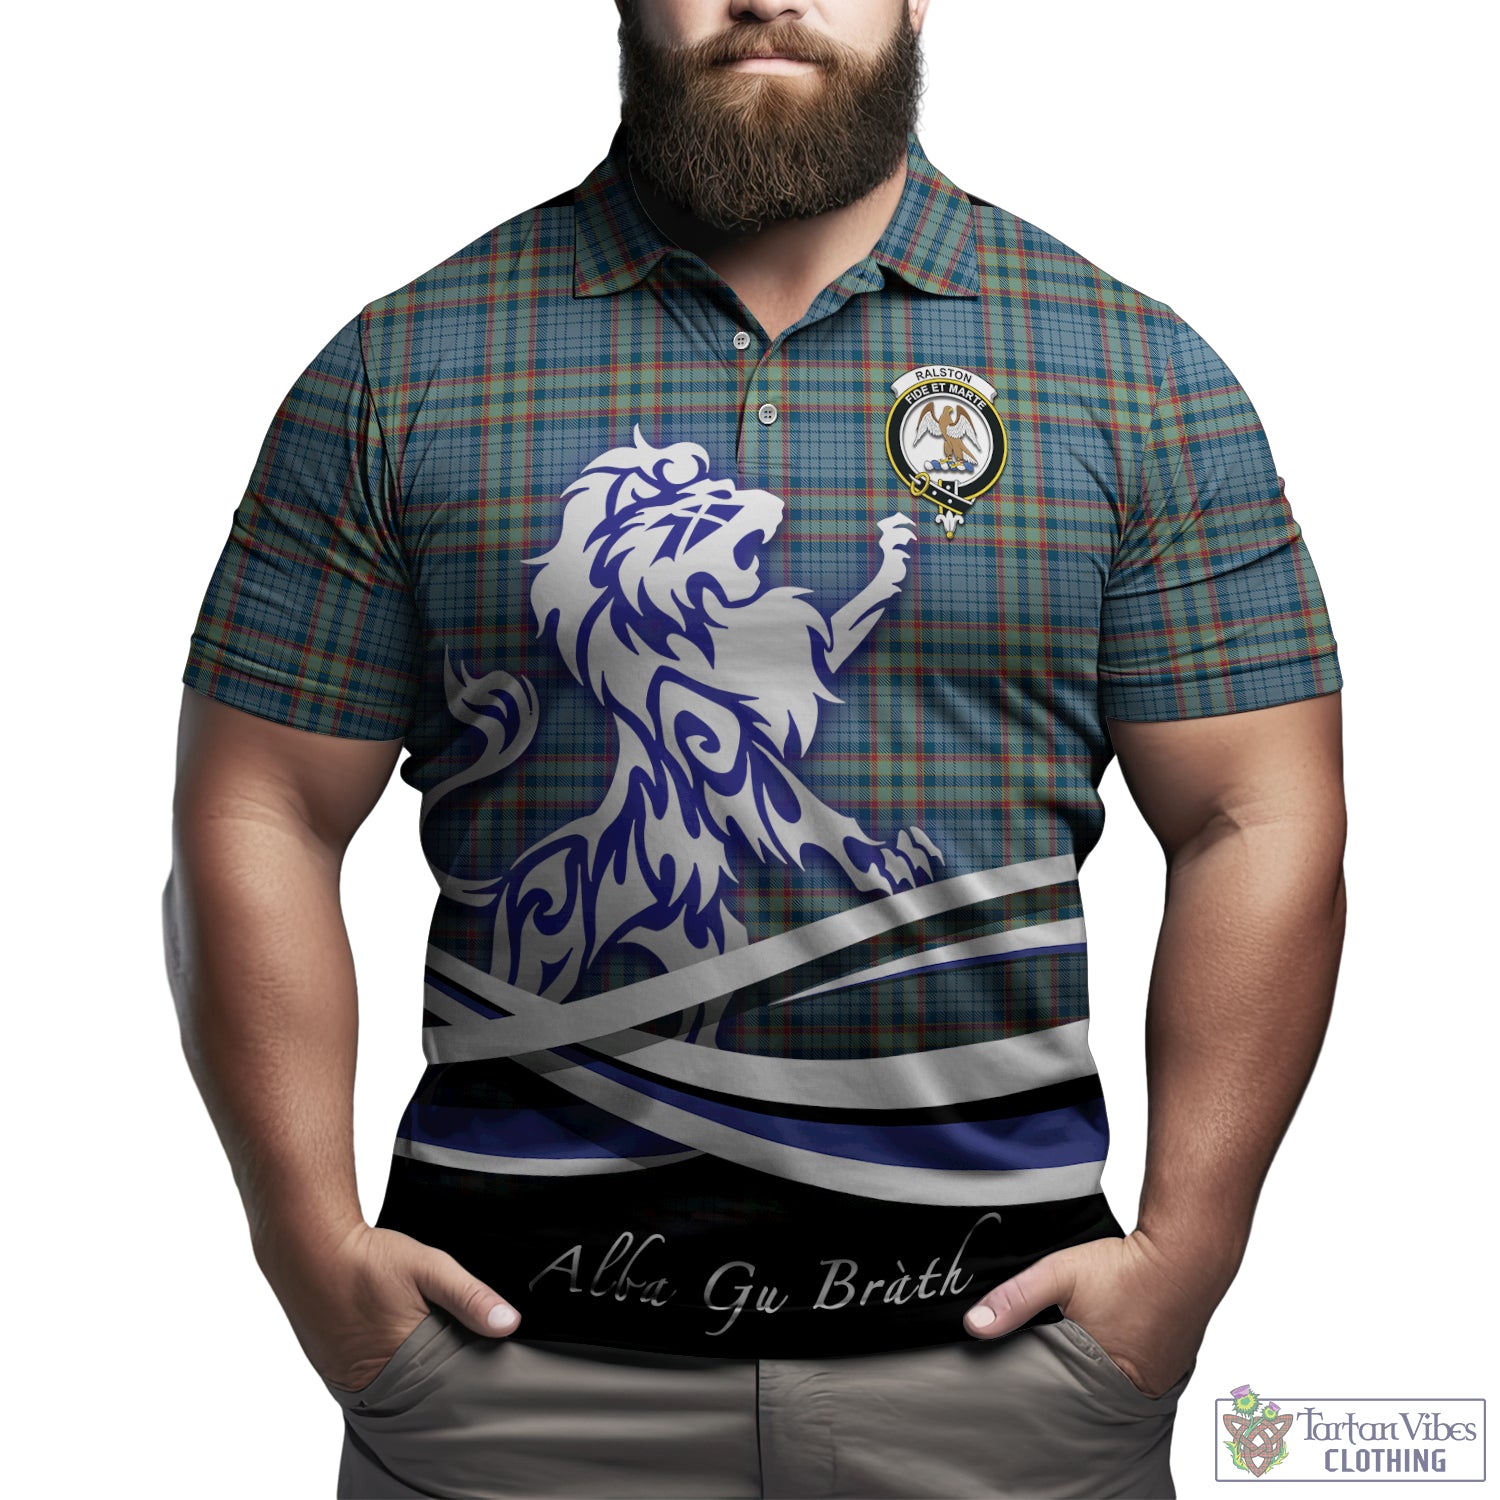 ralston-uk-tartan-polo-shirt-with-alba-gu-brath-regal-lion-emblem